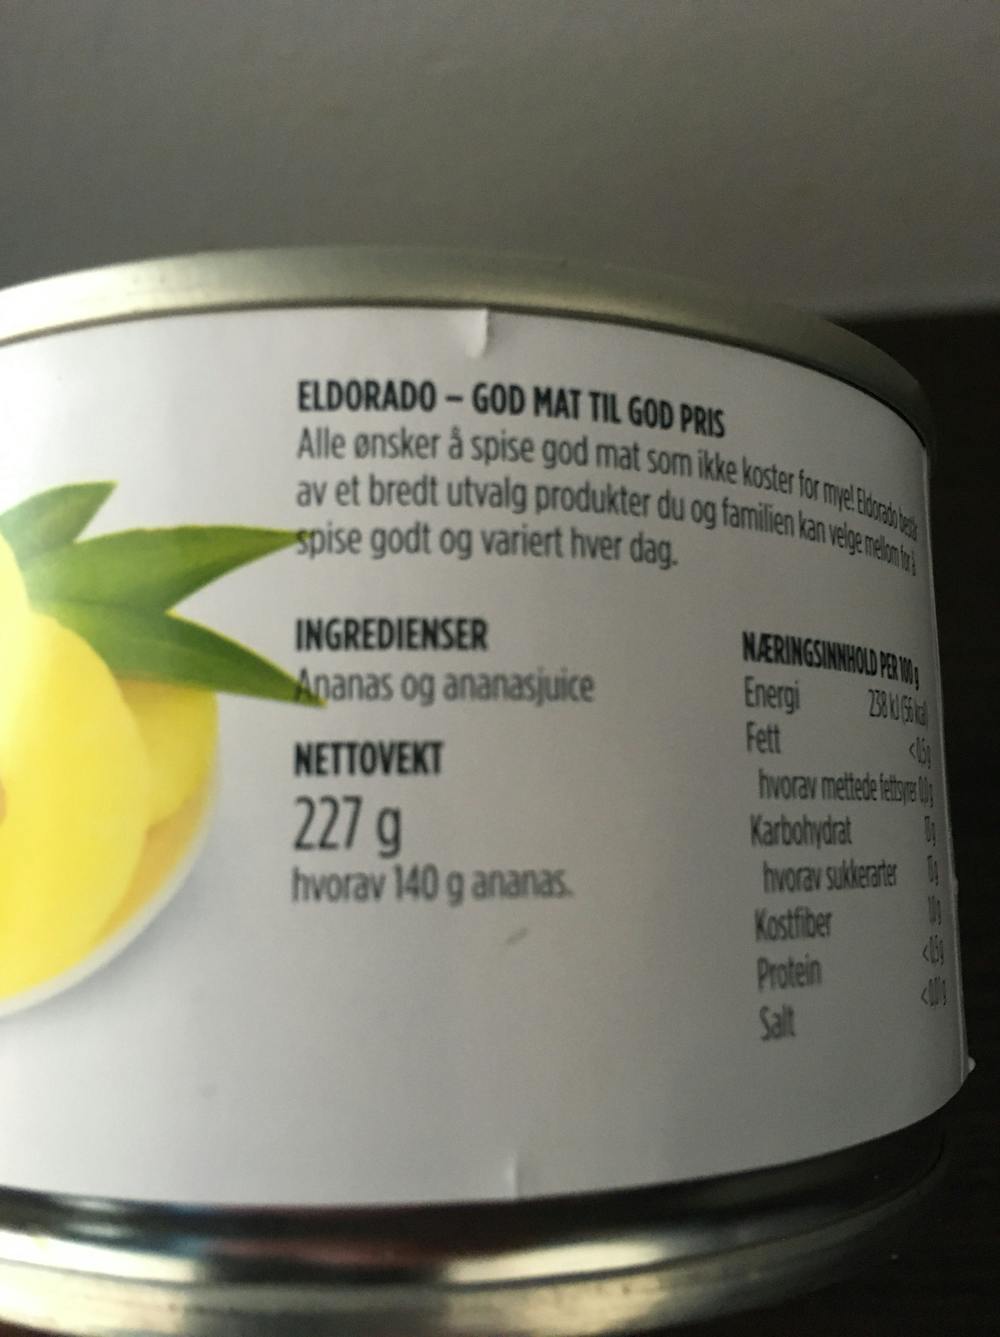 Ingredienslisten til Eldorado Ananas, ringer i juice